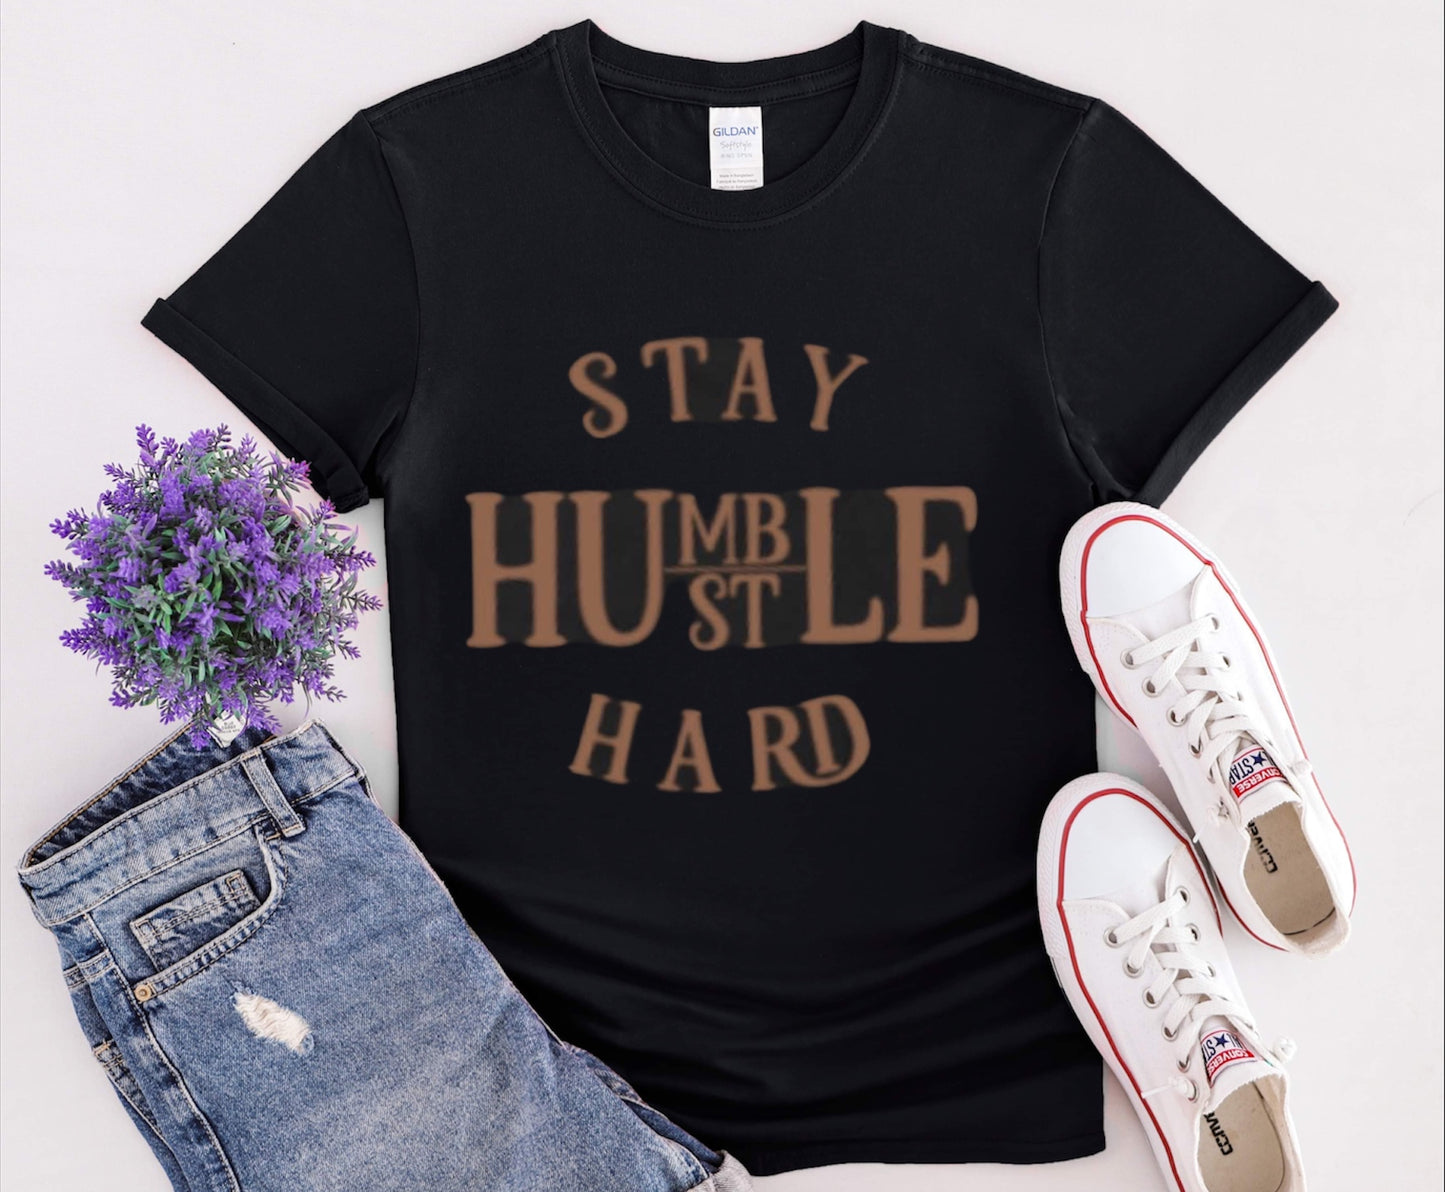 Stay Humble Hustle Hard tshirt